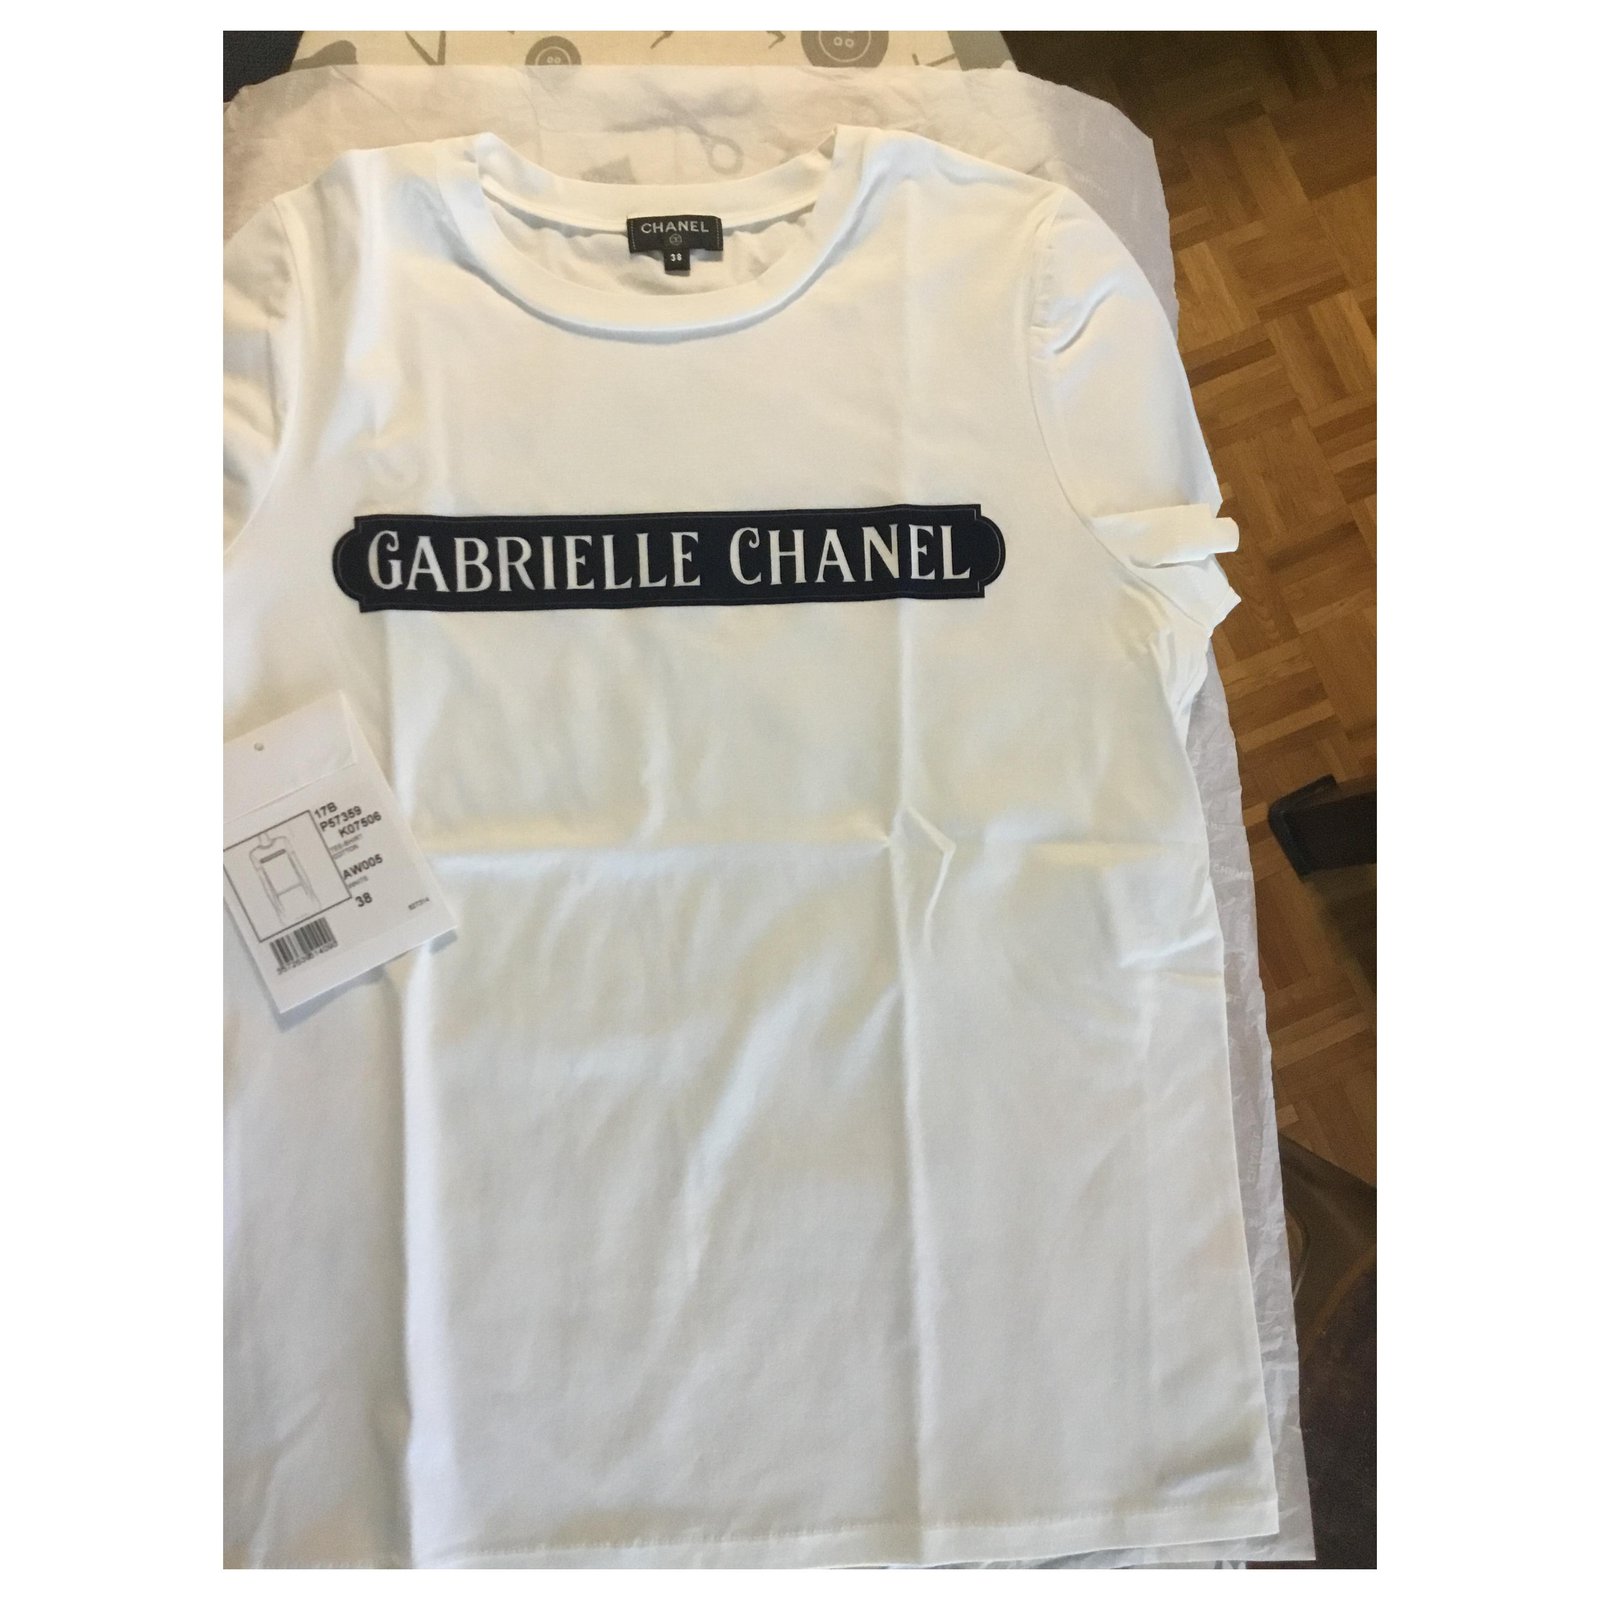 Chanel shirt - Gem